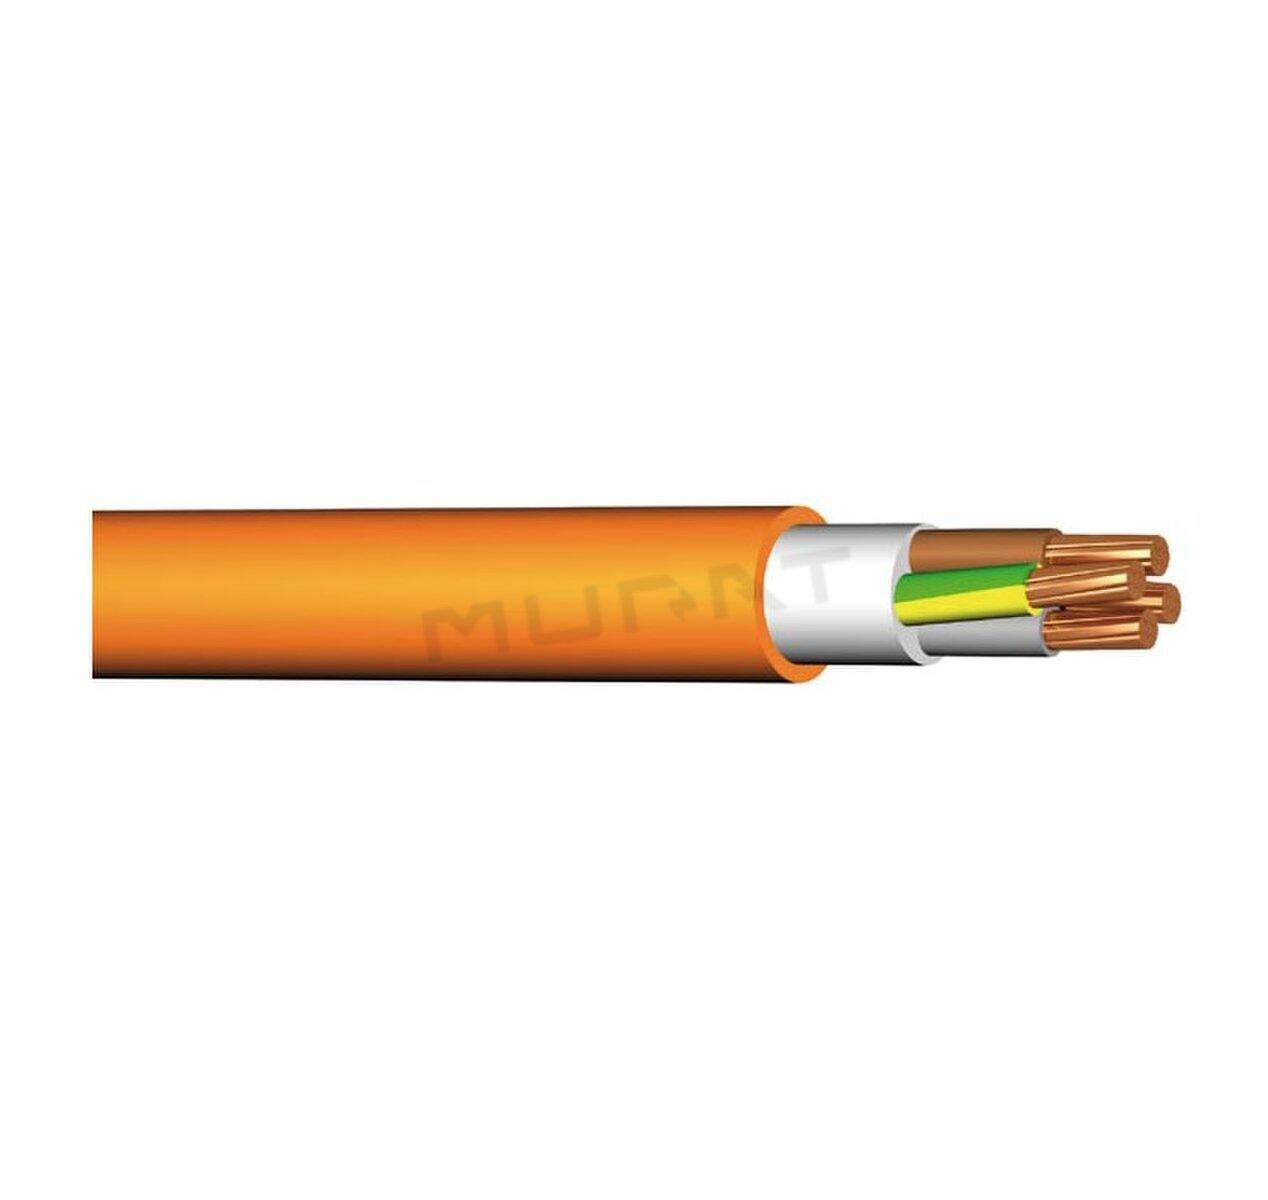 Kábel PRAFlaSafe X-J 1x25 mm2 RM B2ca s1d1a1